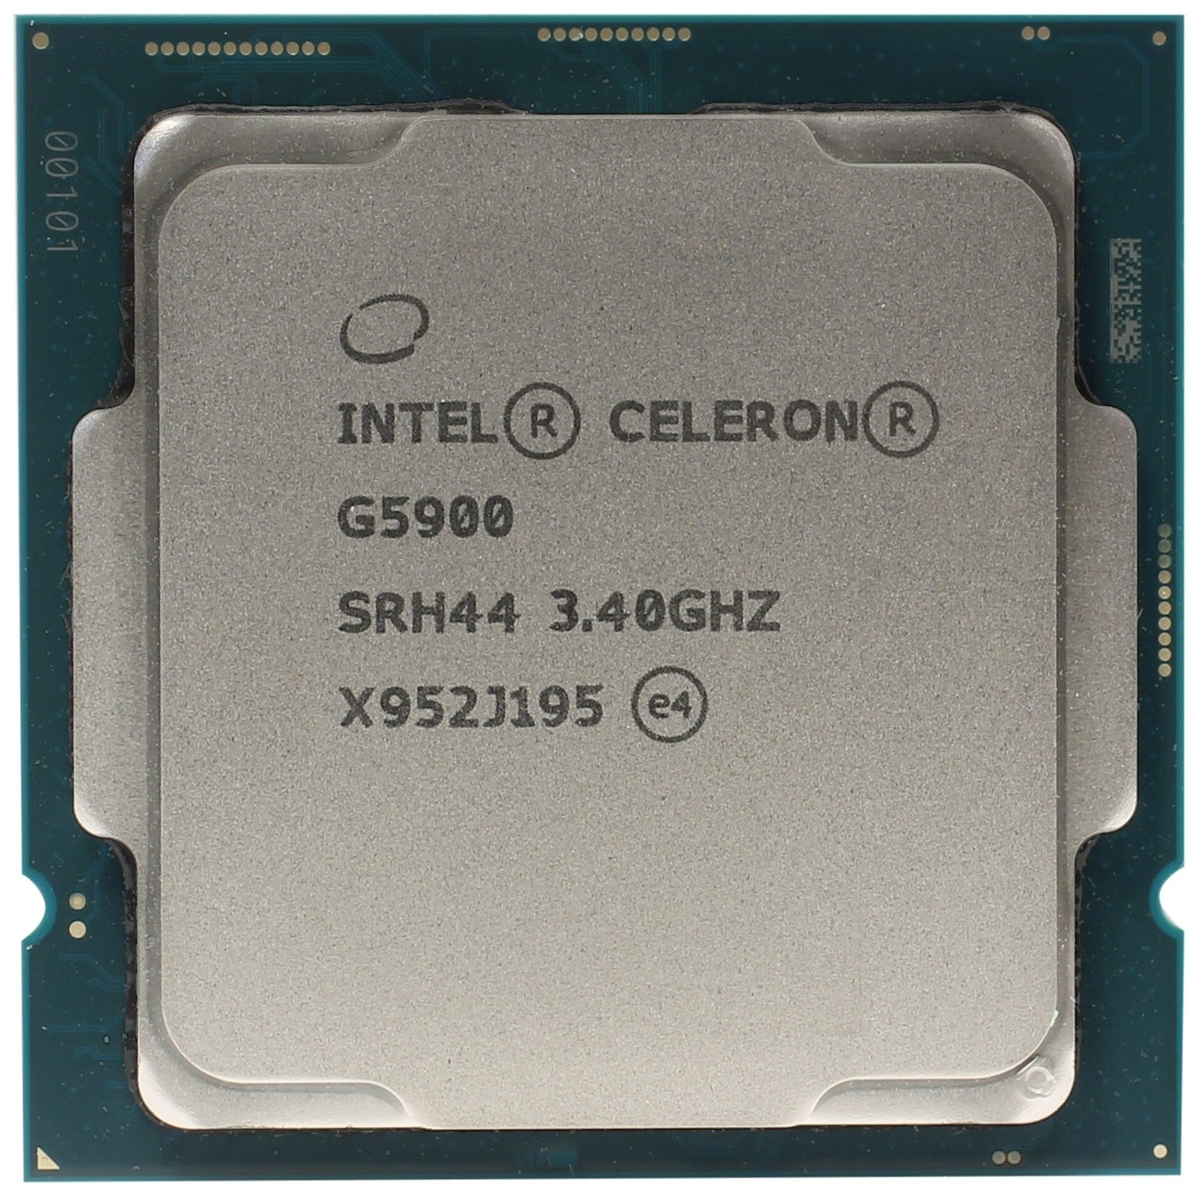 Фото Процессор INTEL 1200 Celeron G5900 оем 2M 3.4 GHz 2/2 Core. Comet Lake 58 Вт HD610